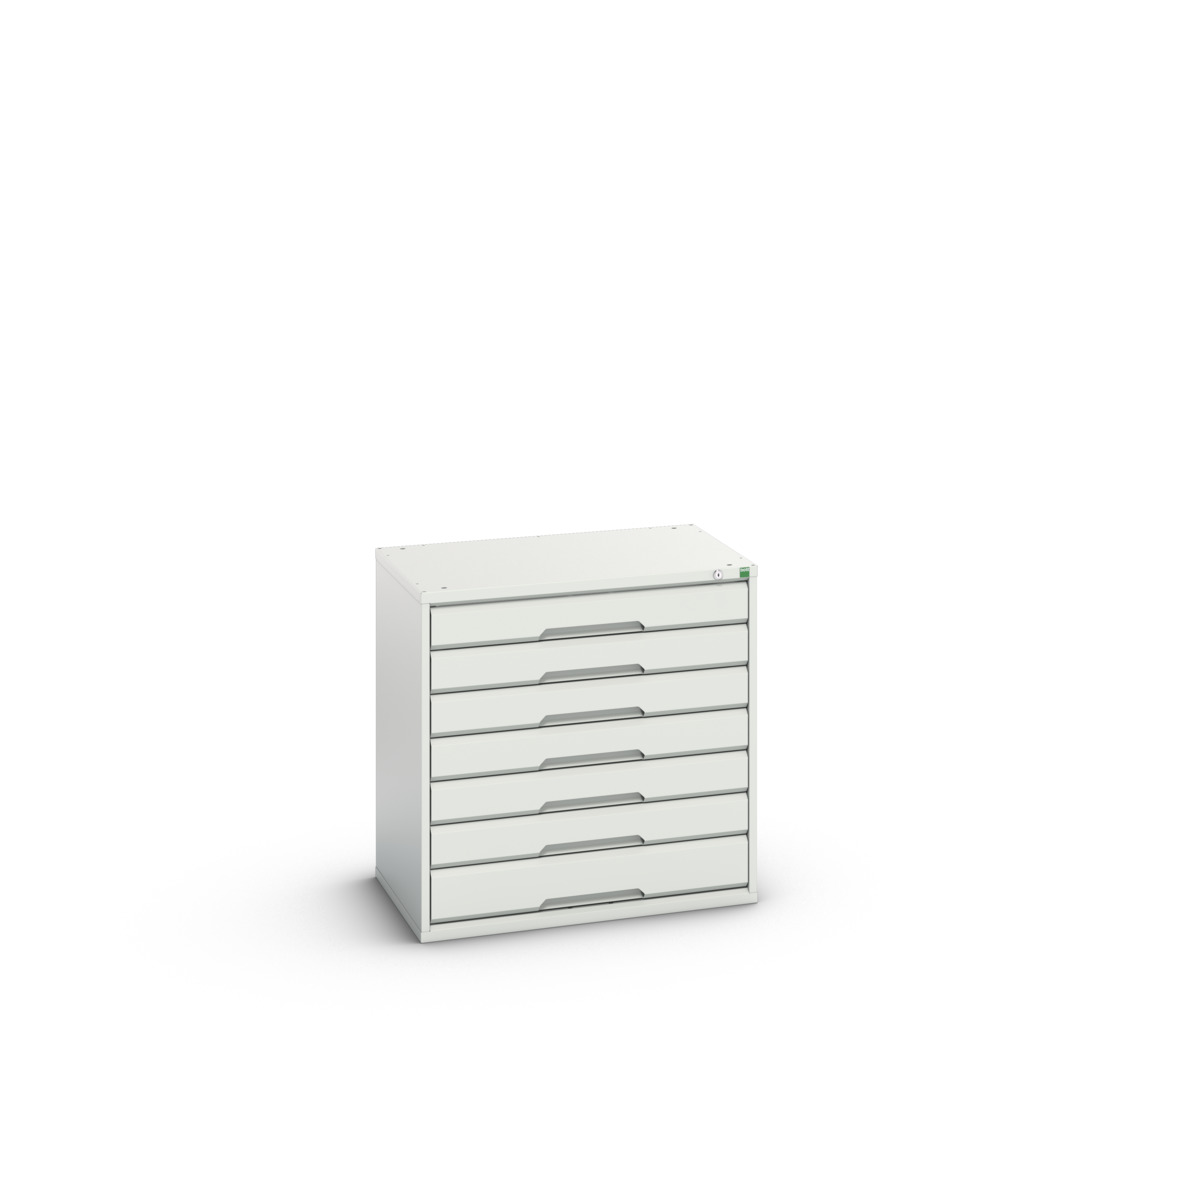 16925115.16 - verso drawer cabinet